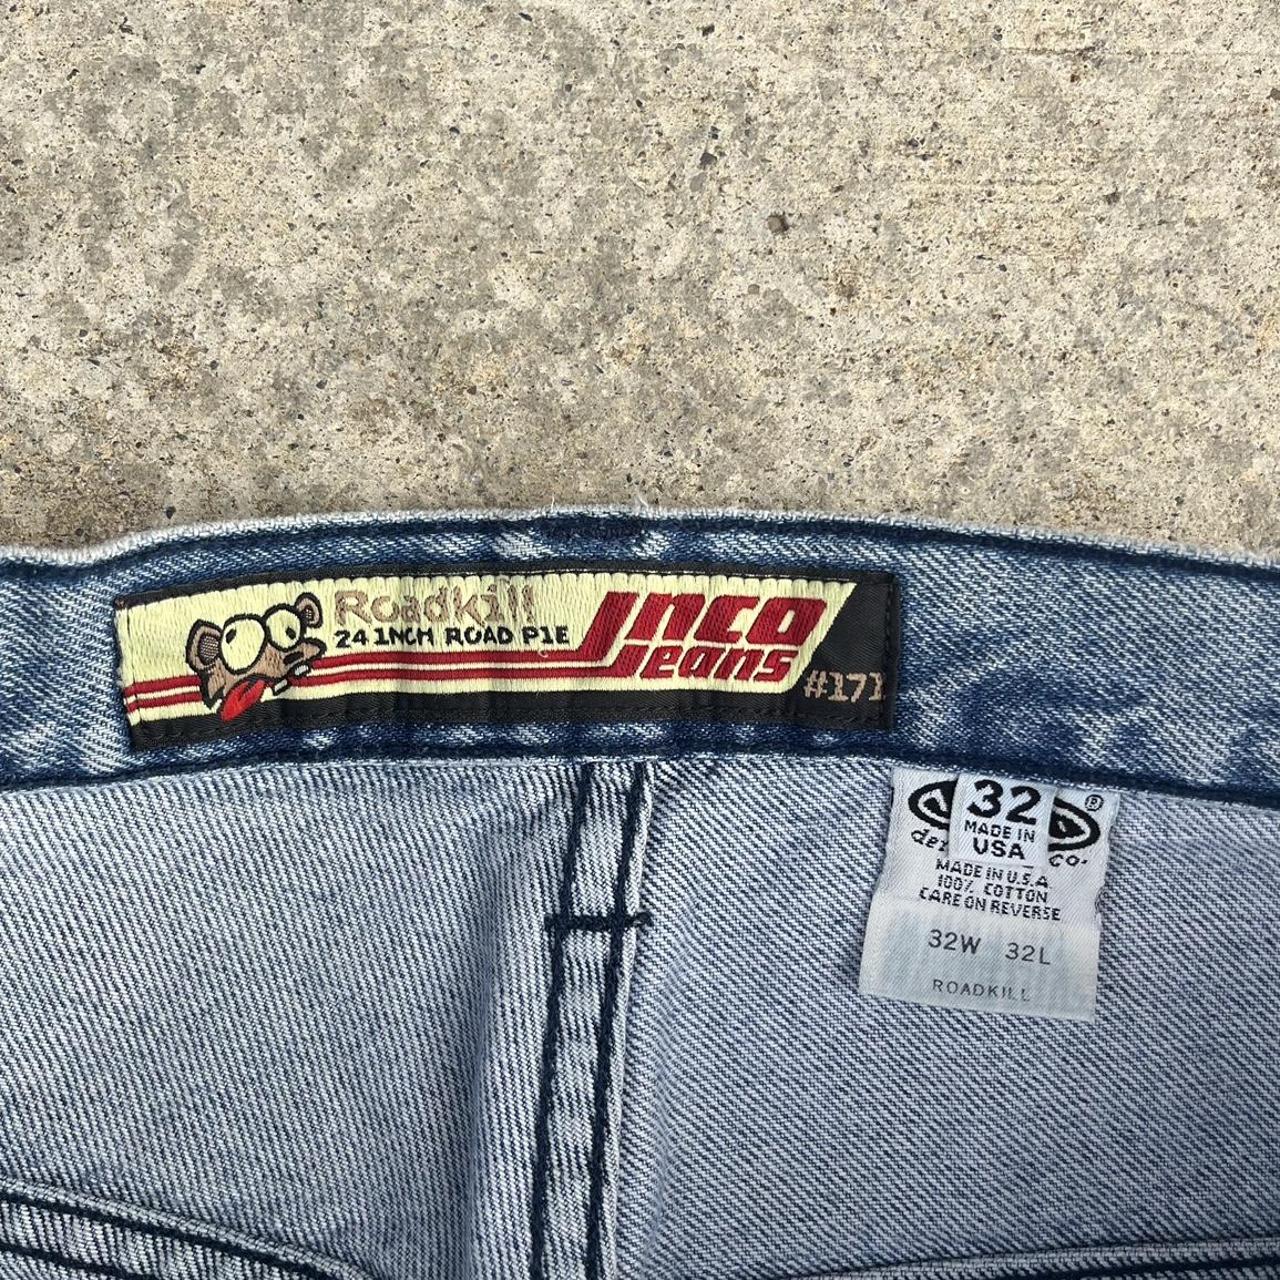 Vintage JNCO 90s Roadkill Squirrel Jeans 🐿️... - Depop